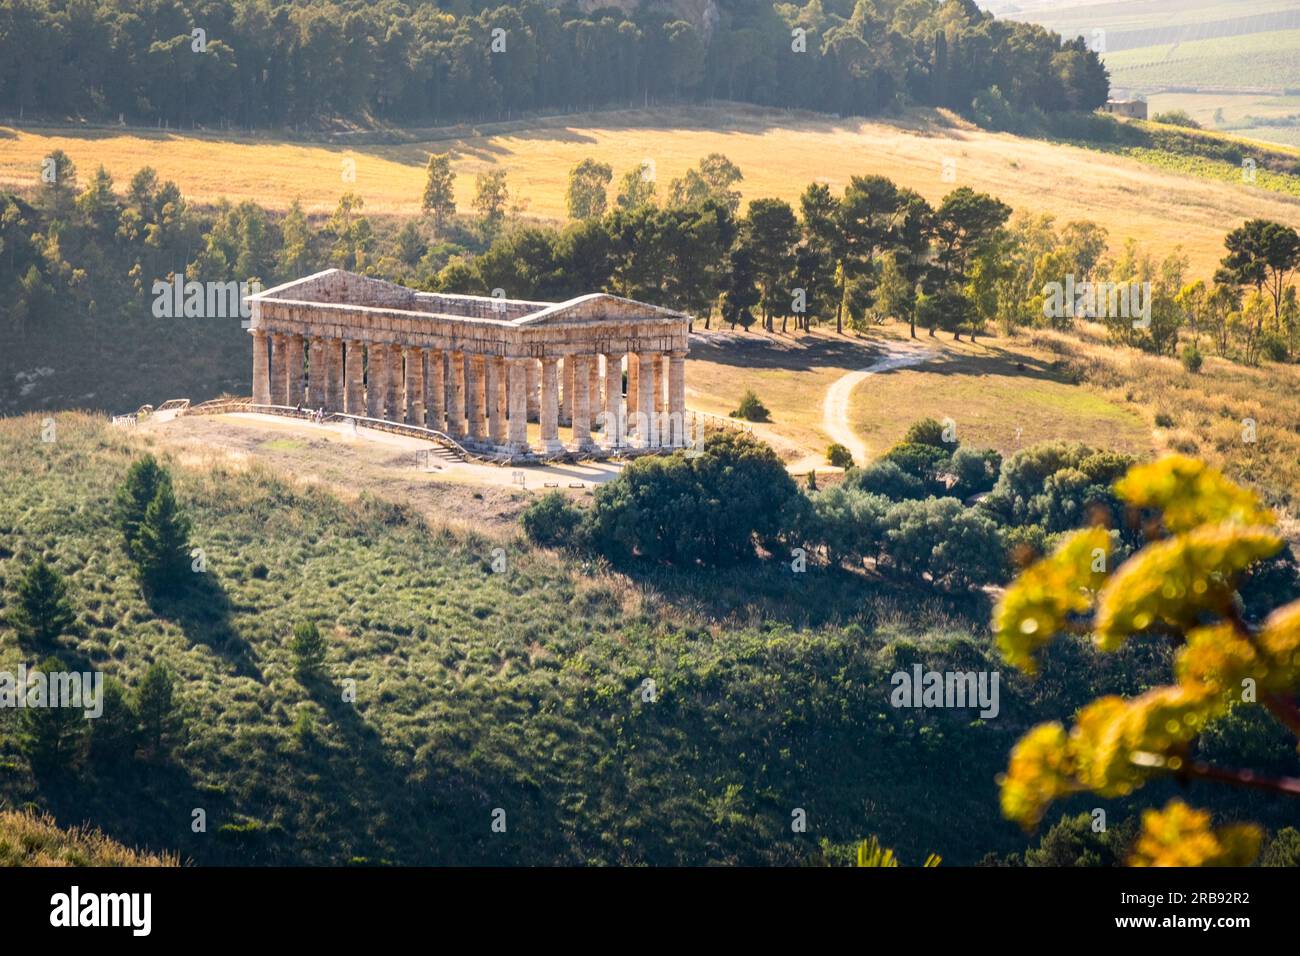 The Doric temple of Segesta. Segesta, Calatafimi, Trapani, Sicily, Italy, Europe. Stock Photo